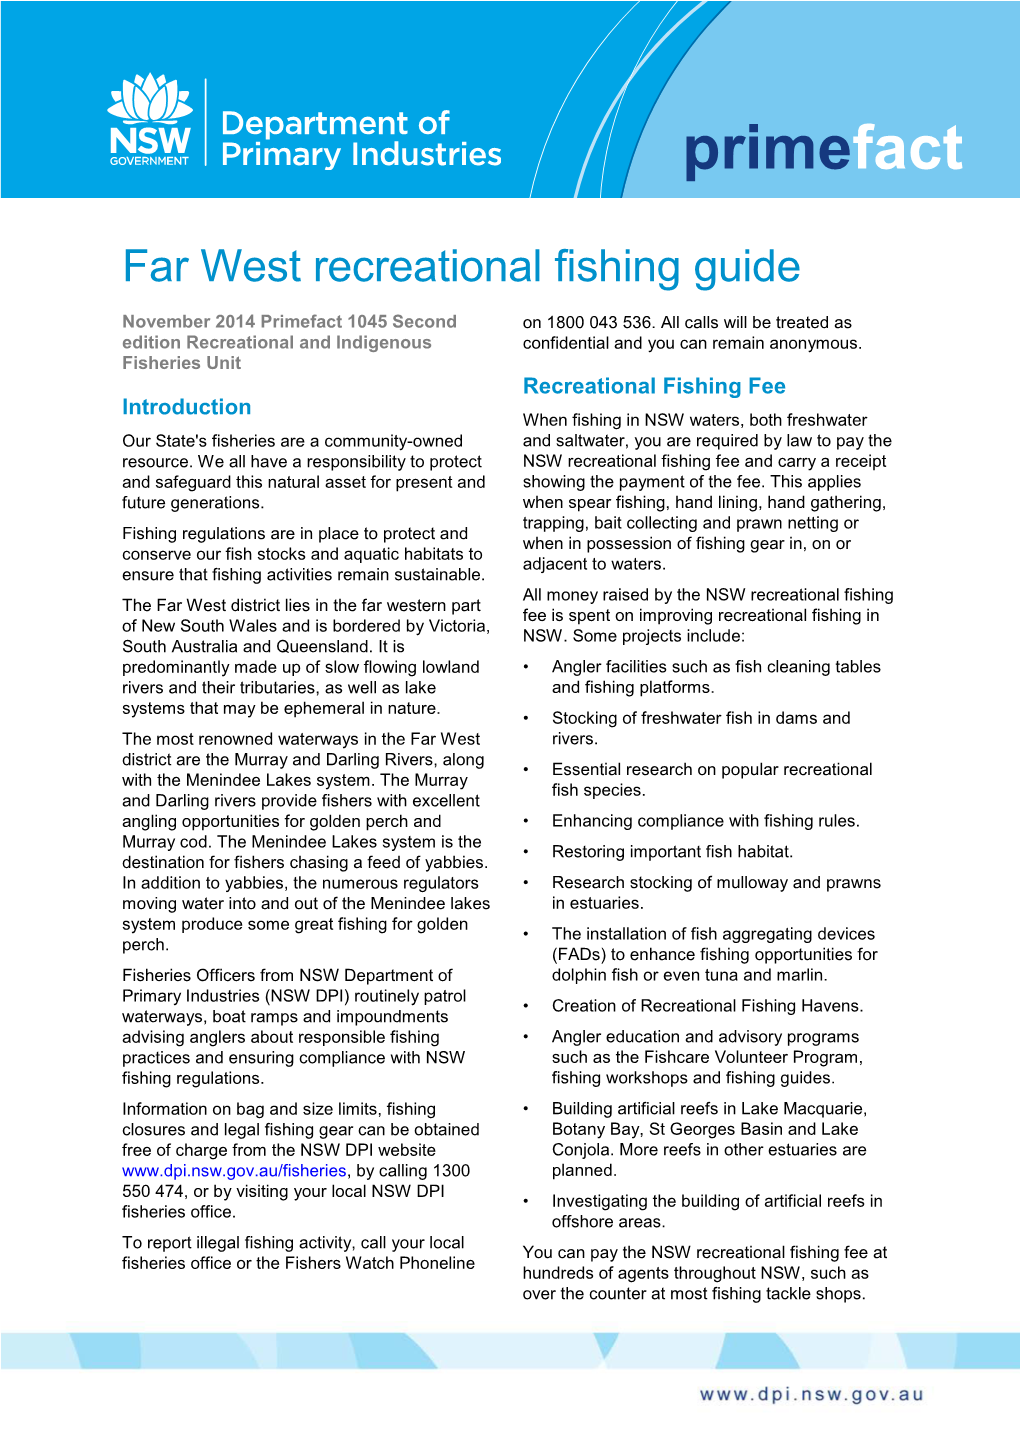 Far West Recreational Fishing Guide